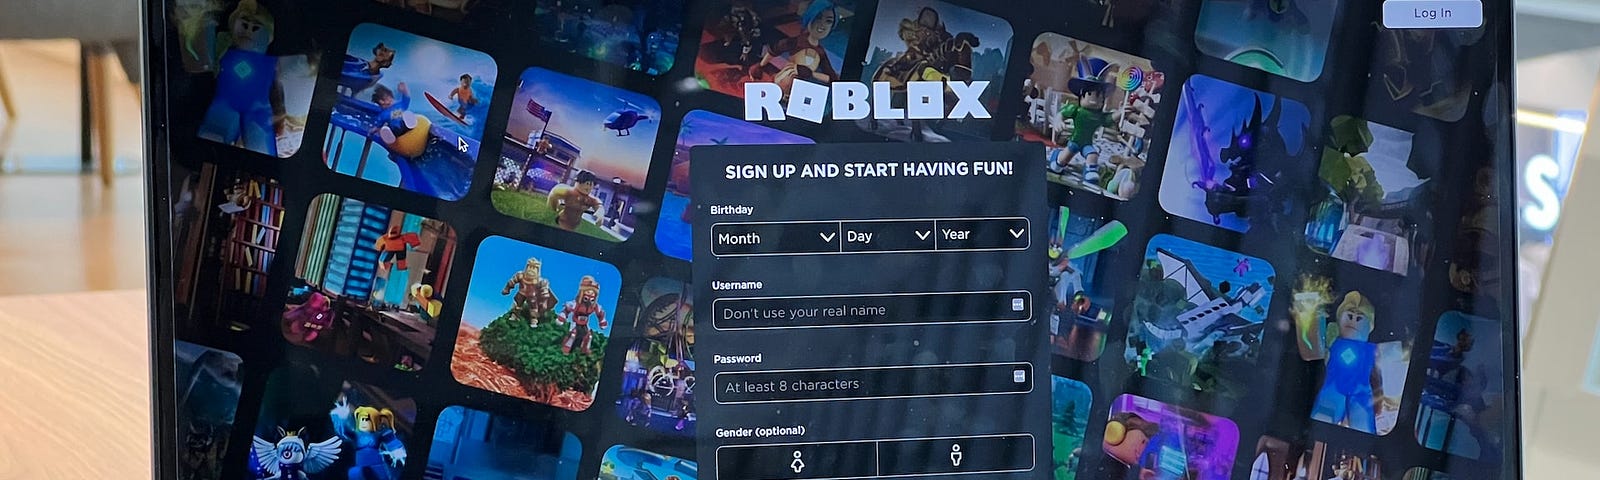 IMAGE: The start login screen on the virtual world Roblox